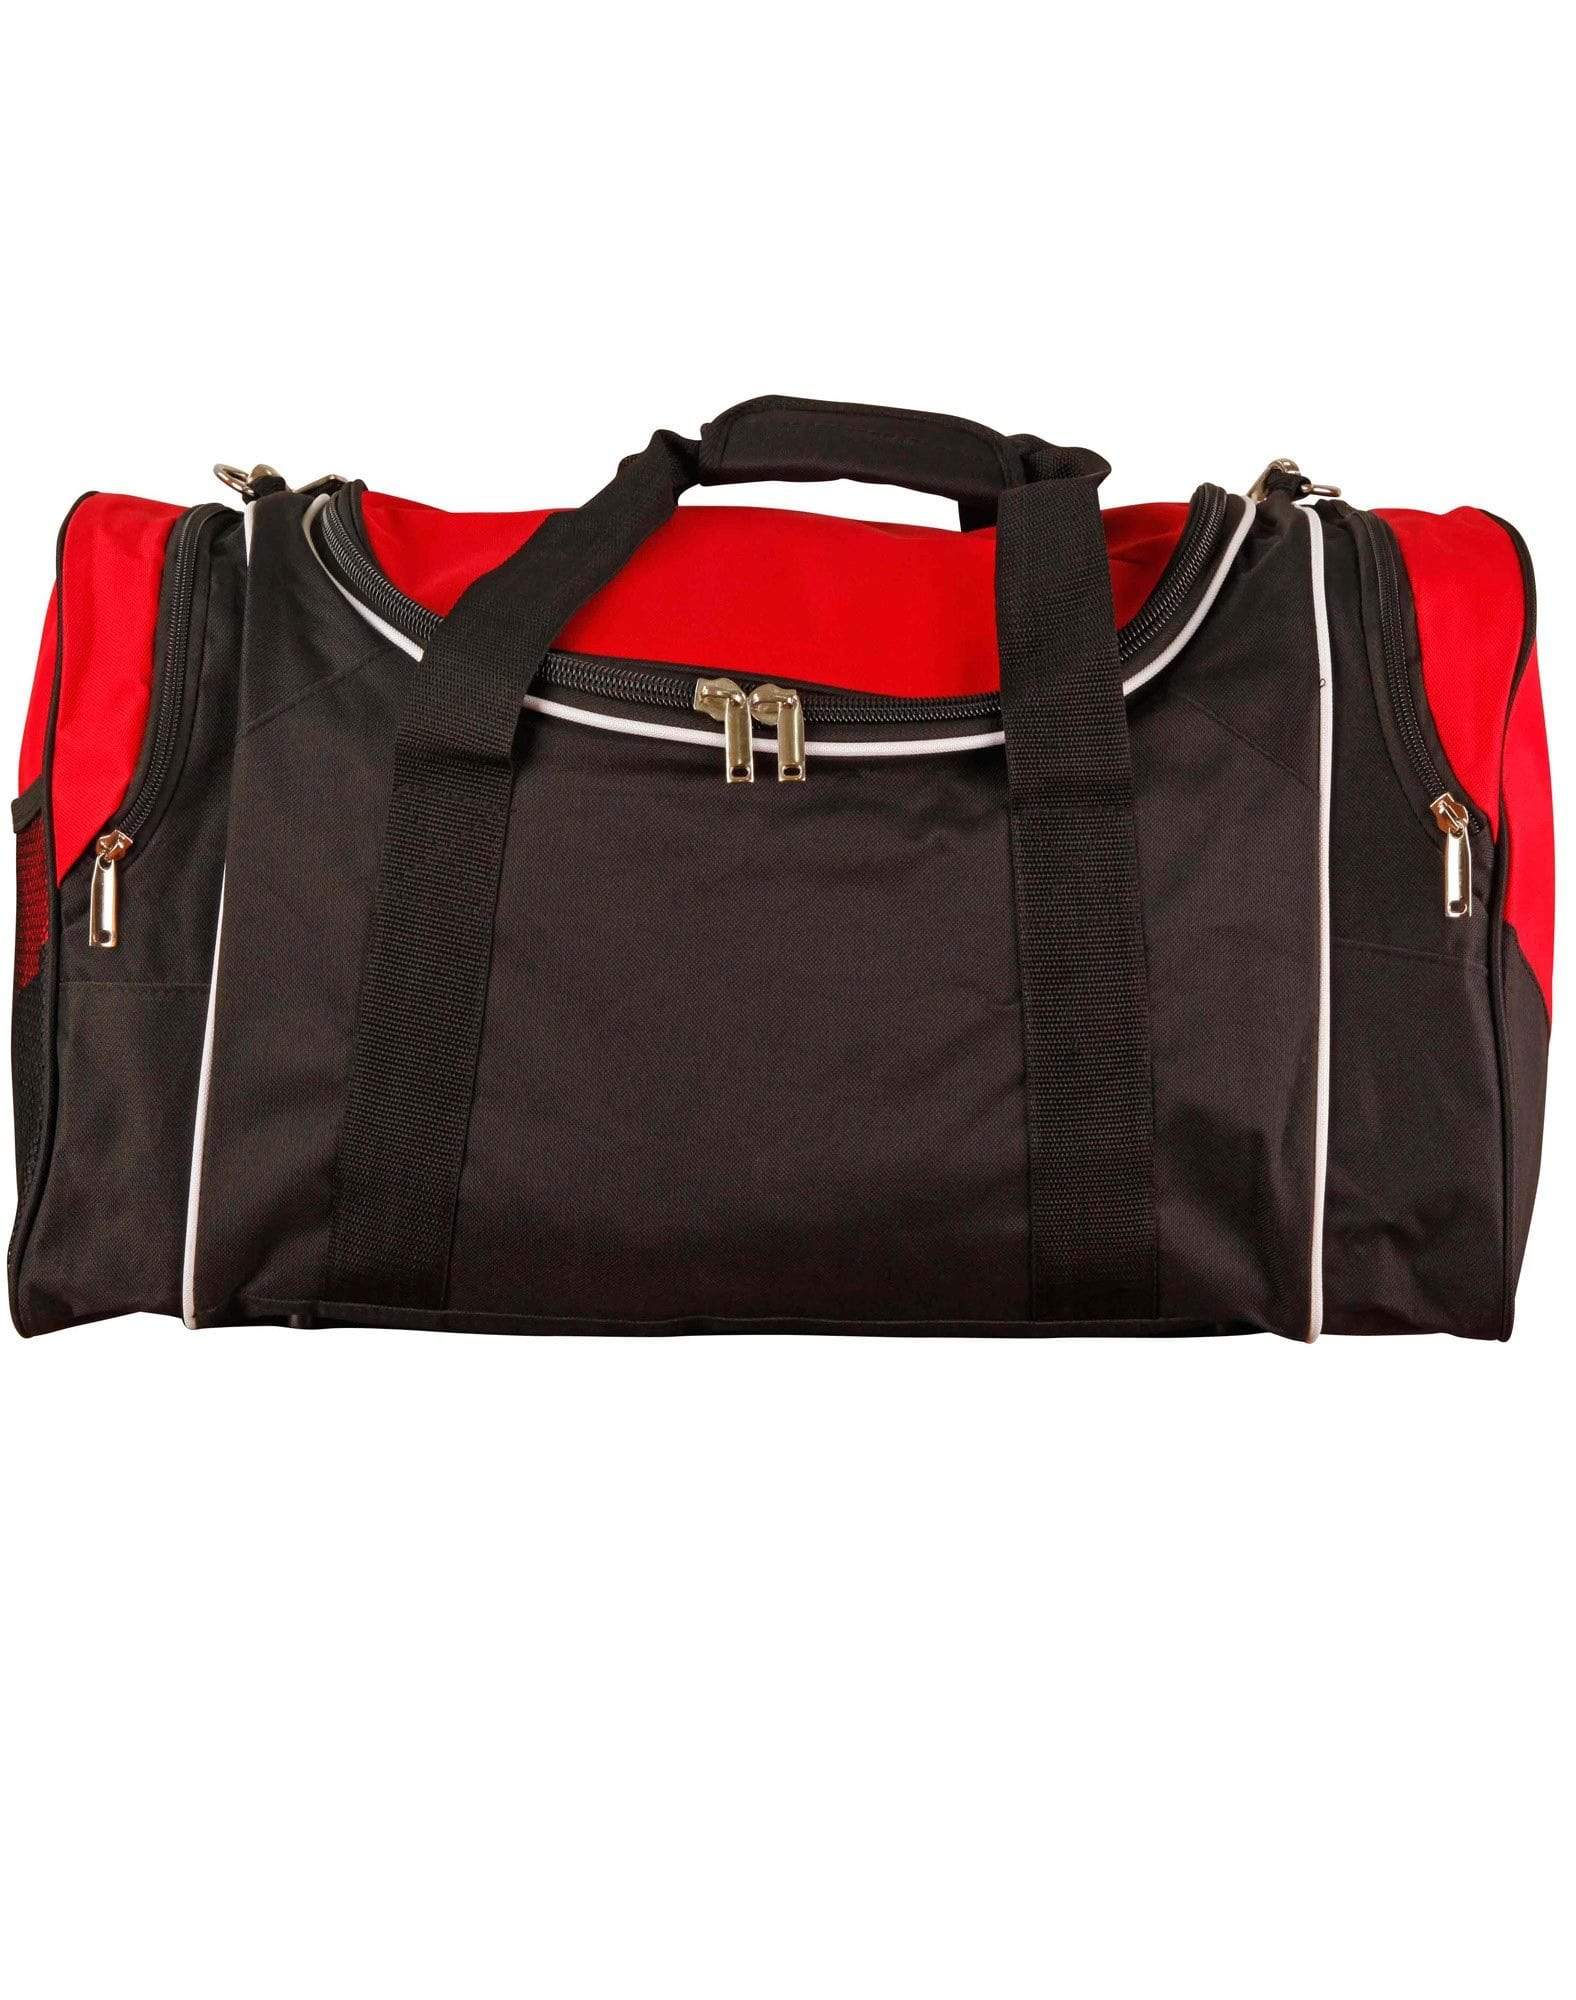 Winner Sports/ Travel Bag B2020 Active Wear Winning Spirit Black/White/Red "(w)65cm x (h)32cm x (d)27cm, 56.2 Litres Capacity" 